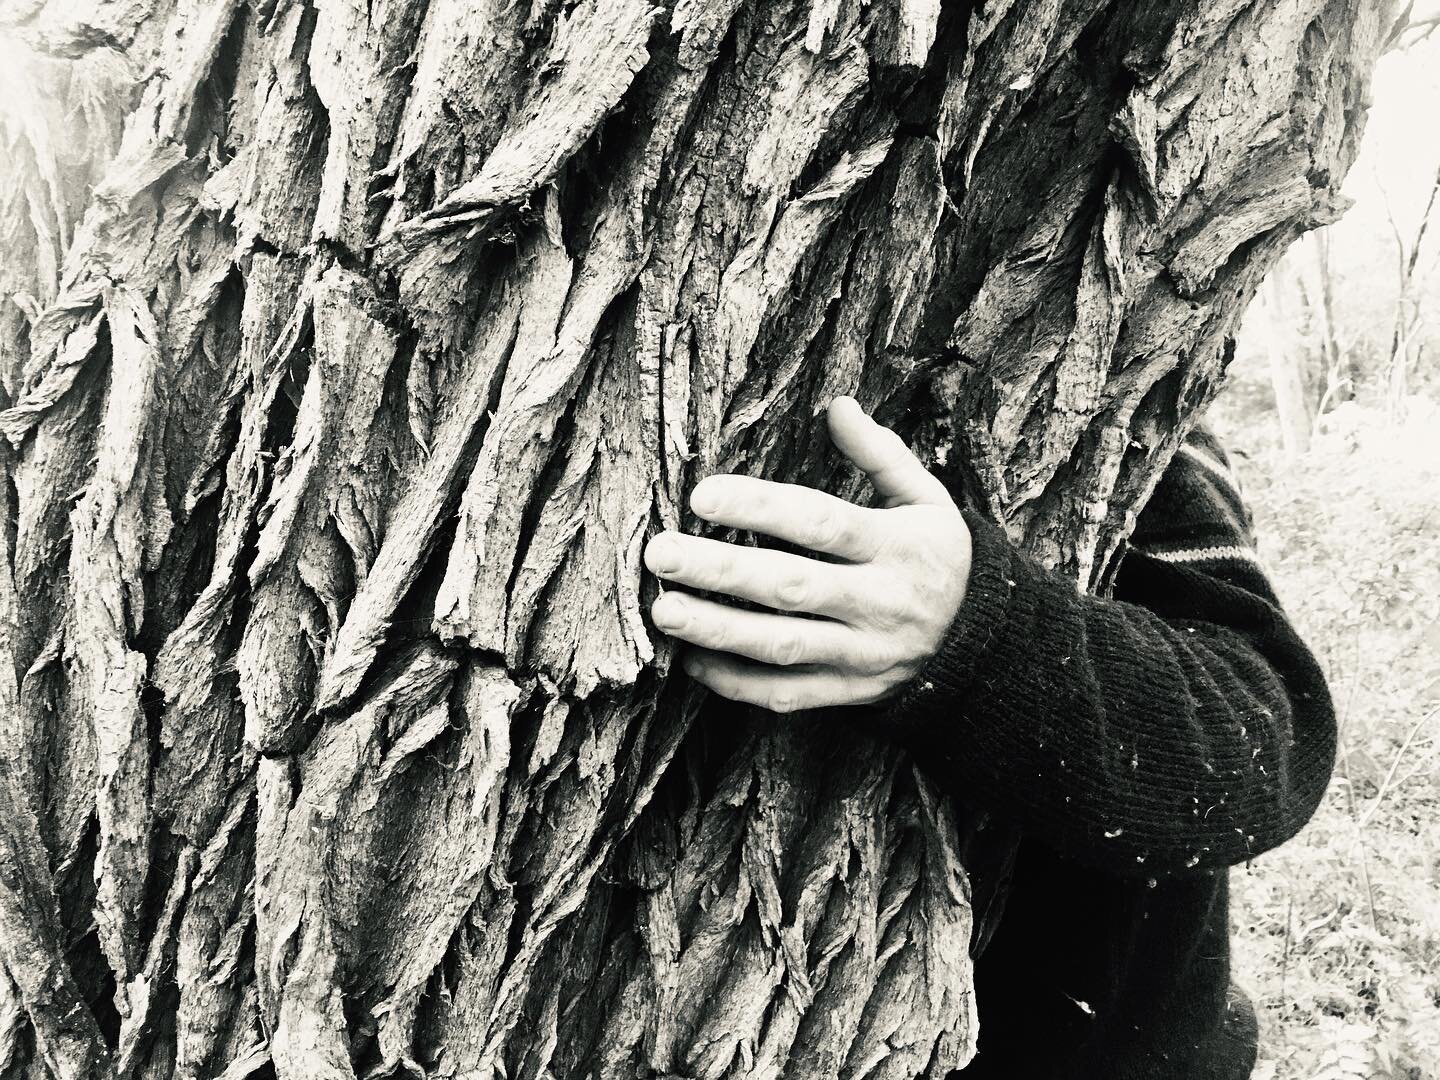 #treehugs are the best 
www.joytrails.com.au 
#shinrinyoku #forestbathing #foresttherapy #naturetherapy #jarrah #marri #southwestwa #australianforesttherapy #foresttherapyguide #wellness #natureheals #wellbeing #margaretriverregion #cowaramup #gracet